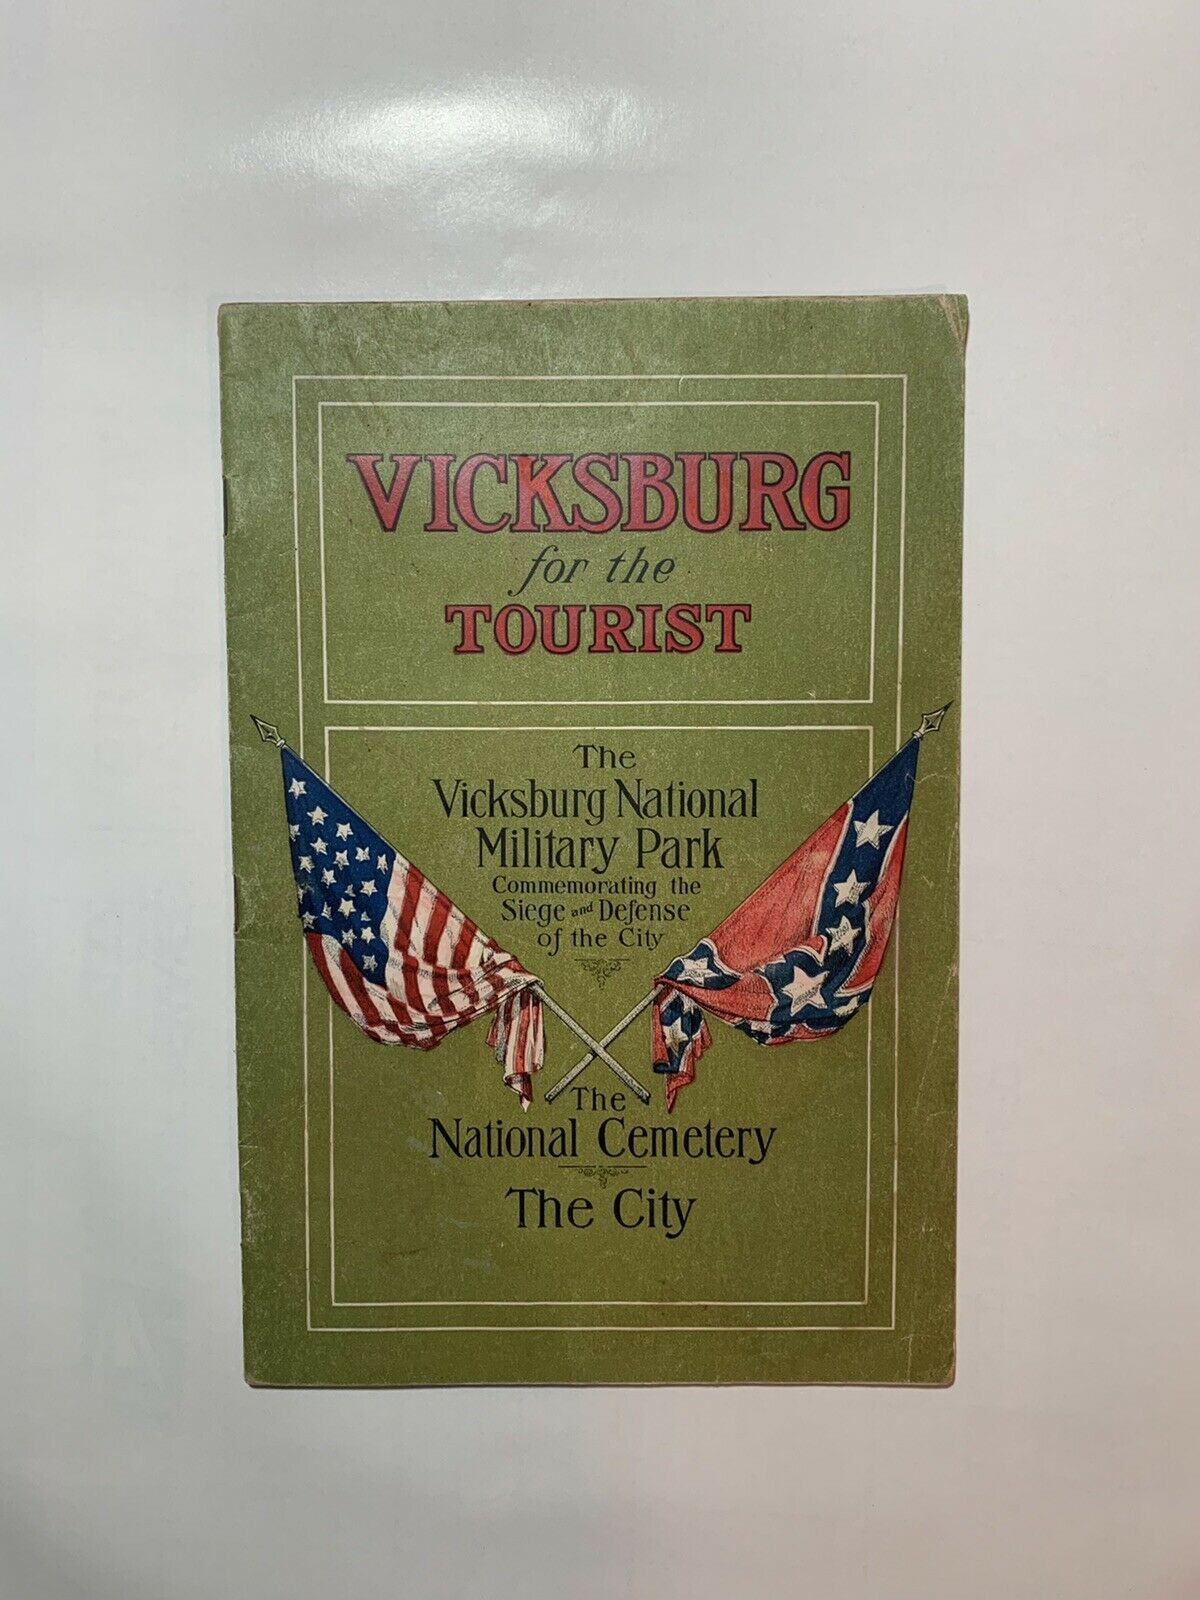 1910 Illinois Central Railroad Vicksburg For The Tourist National Military Park